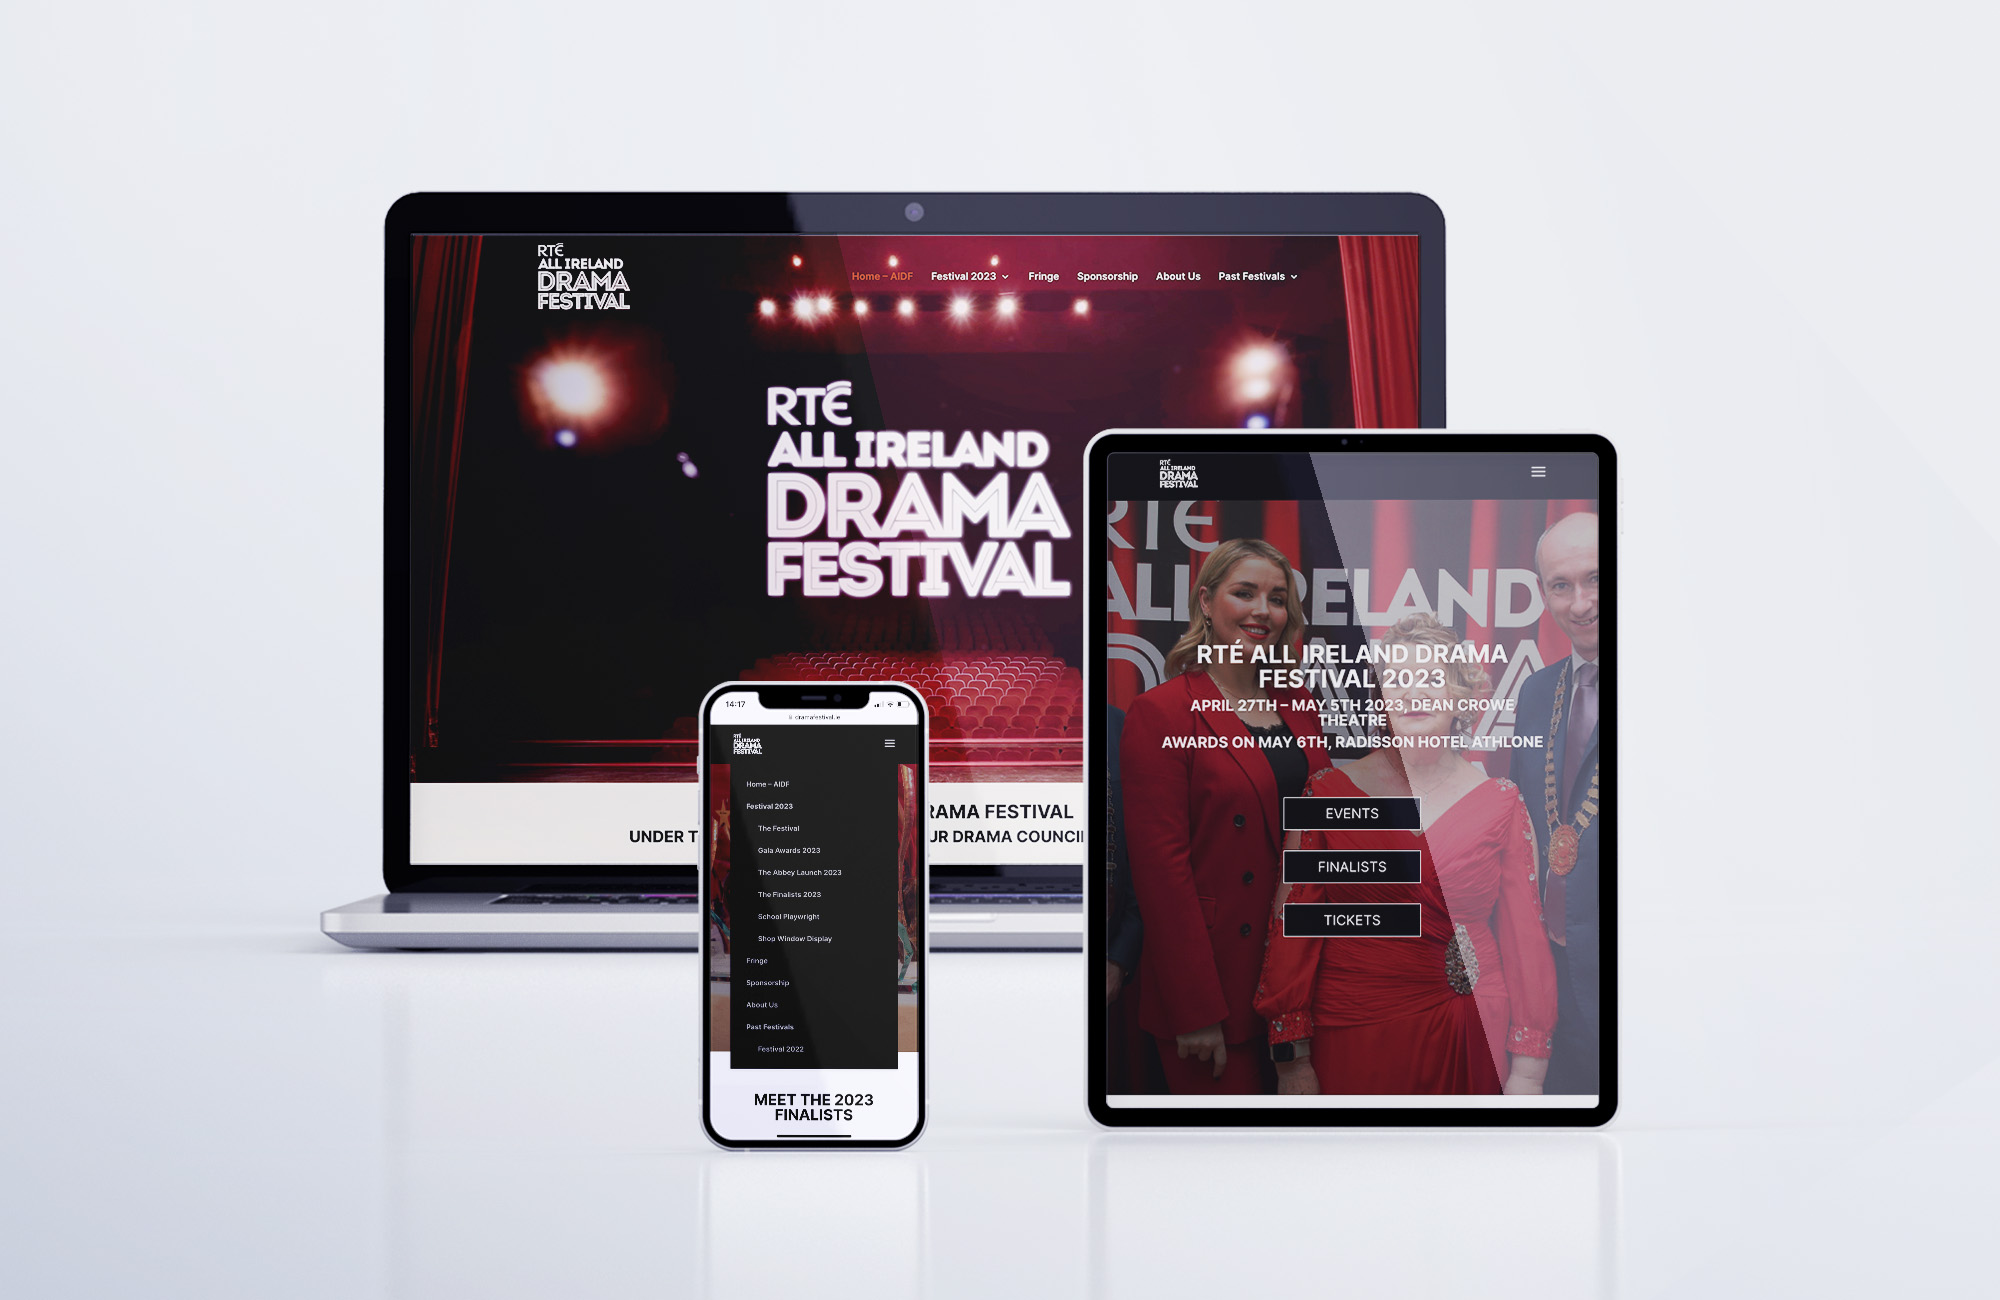 All ireland Drama Festival Website Mockup